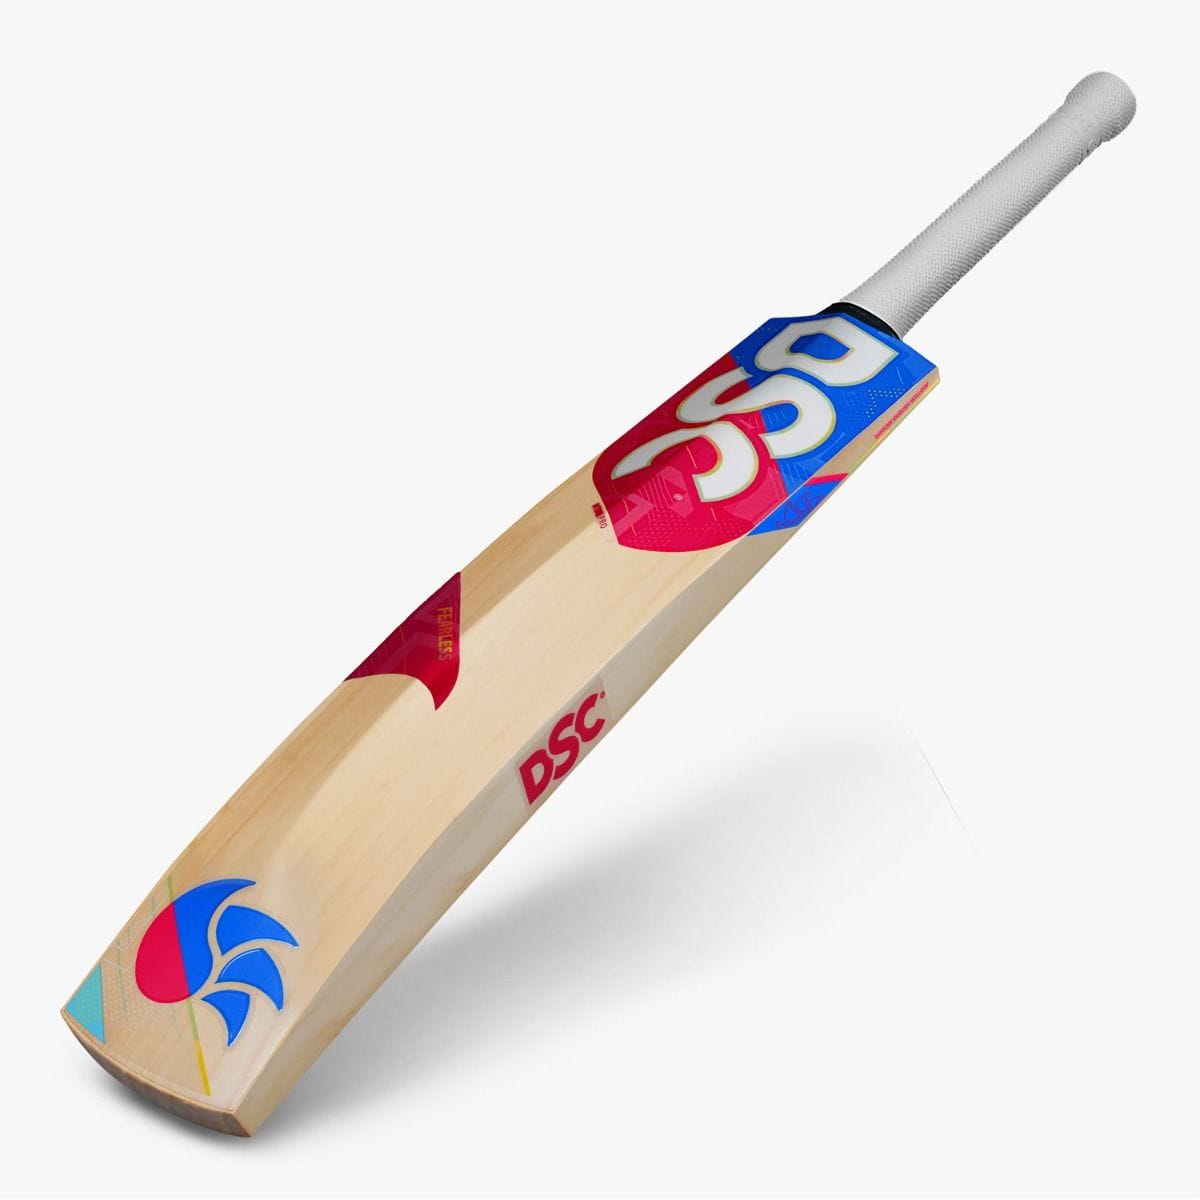 WSC Cricket Bats DSC Intense Pro Adult Cricket Bat SH